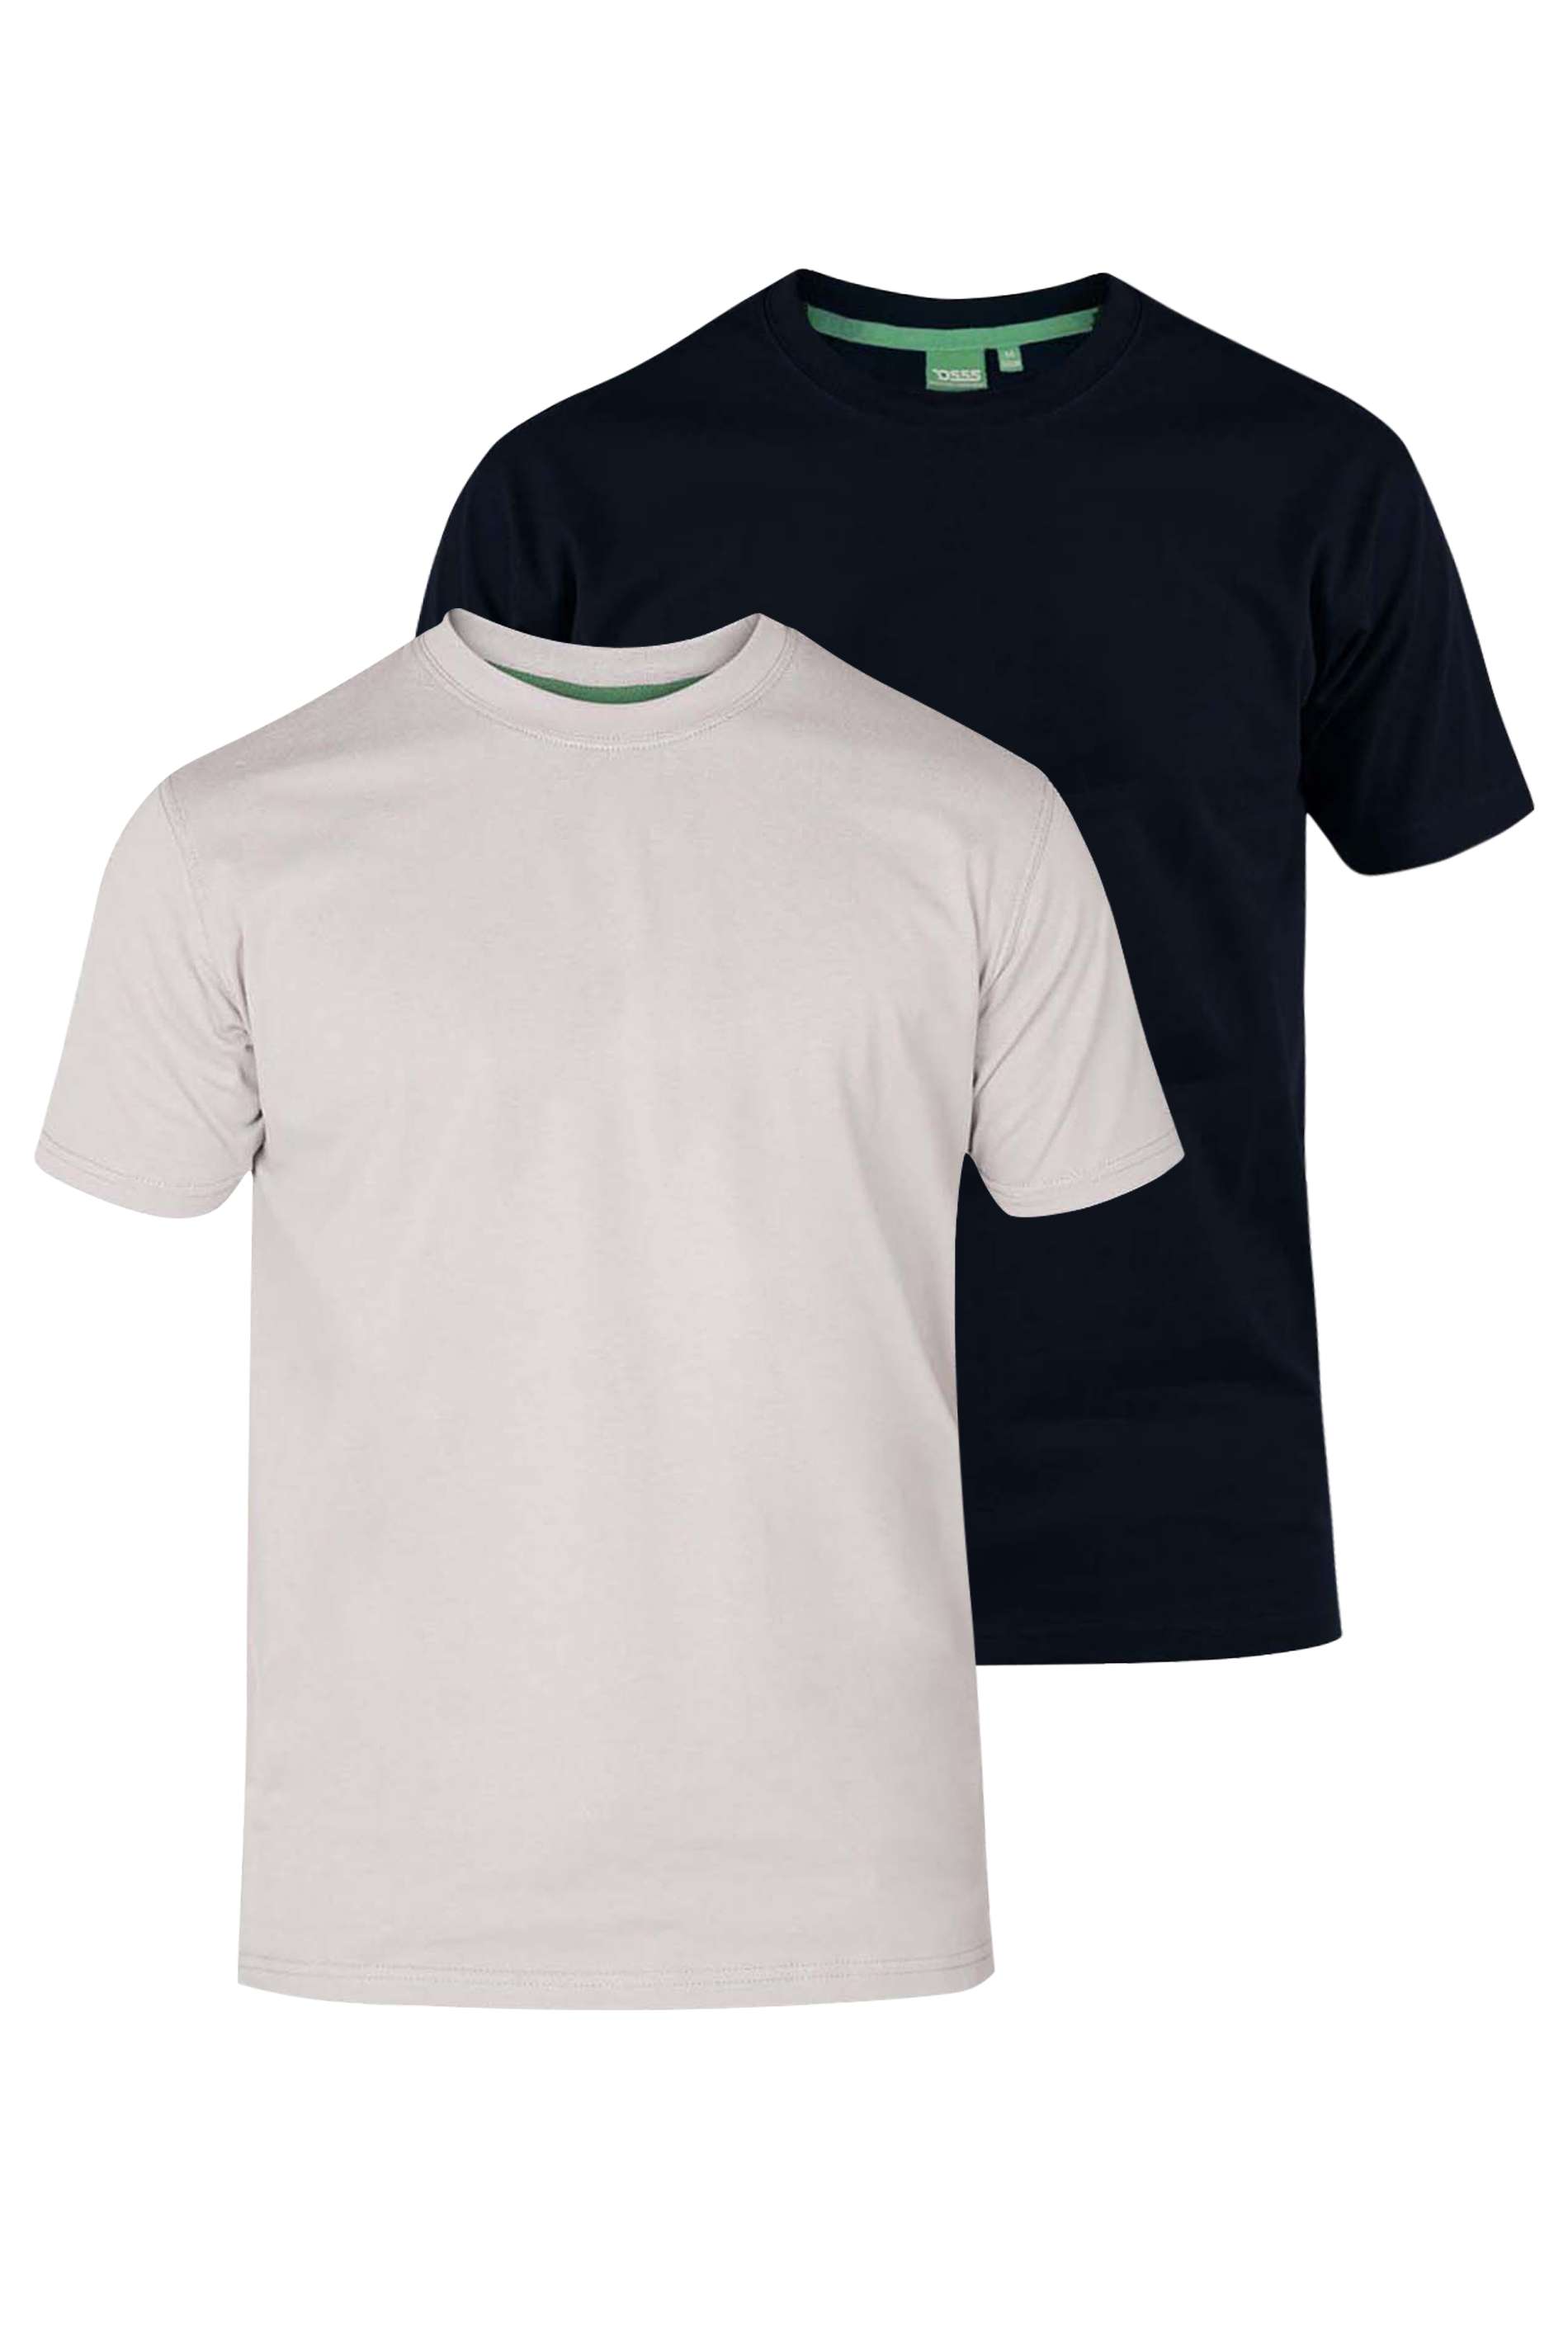 D555 Big & Tall 2 PACK Black & White T-Shirts| BadRhino 3